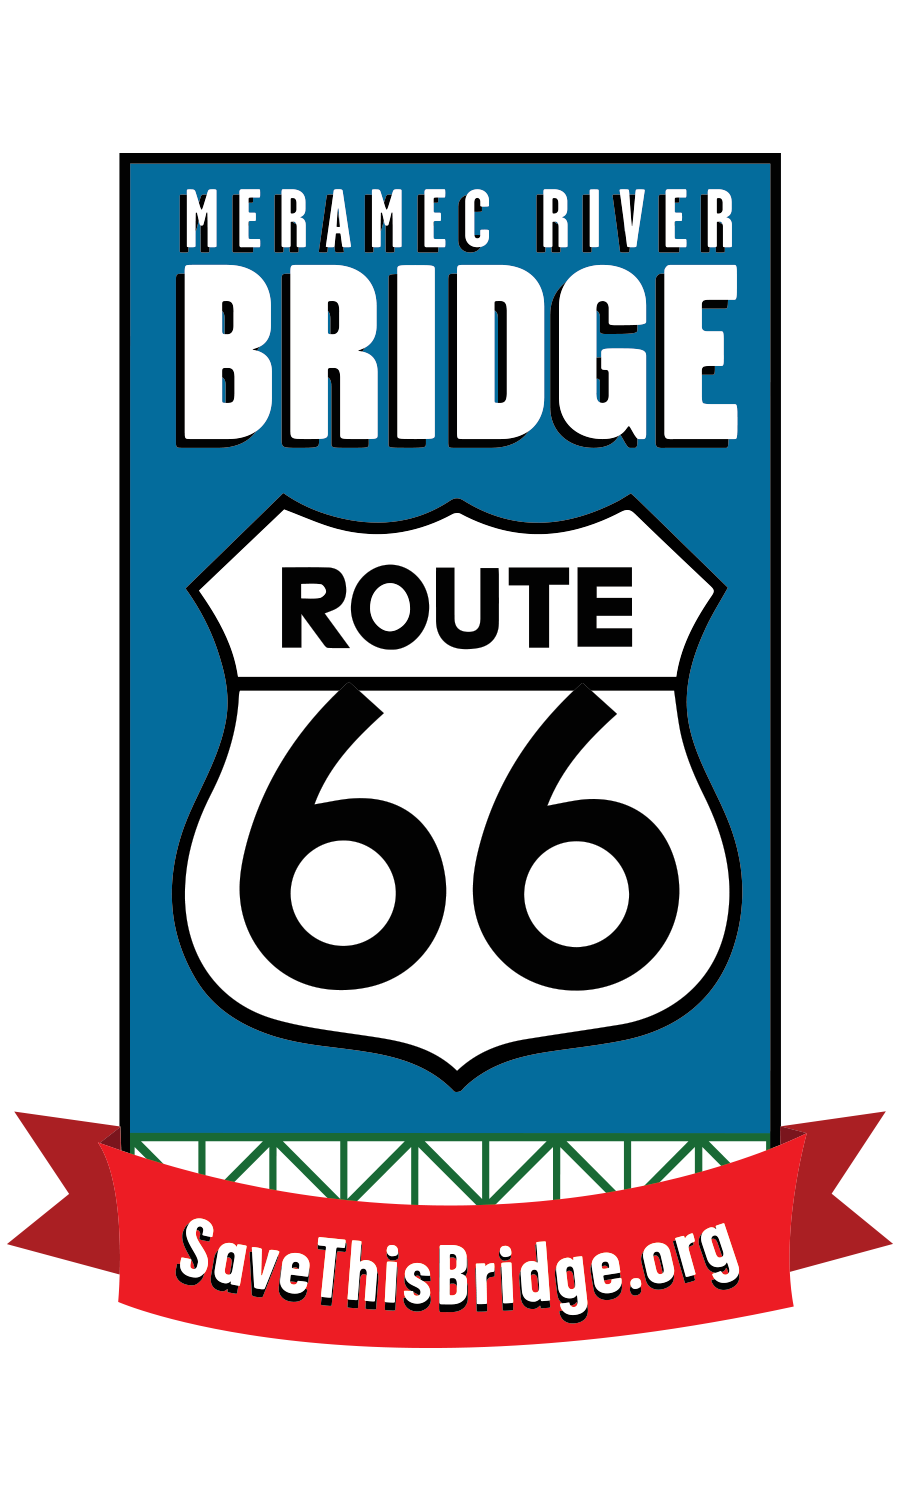 Route 66 bridge at the Meremac River